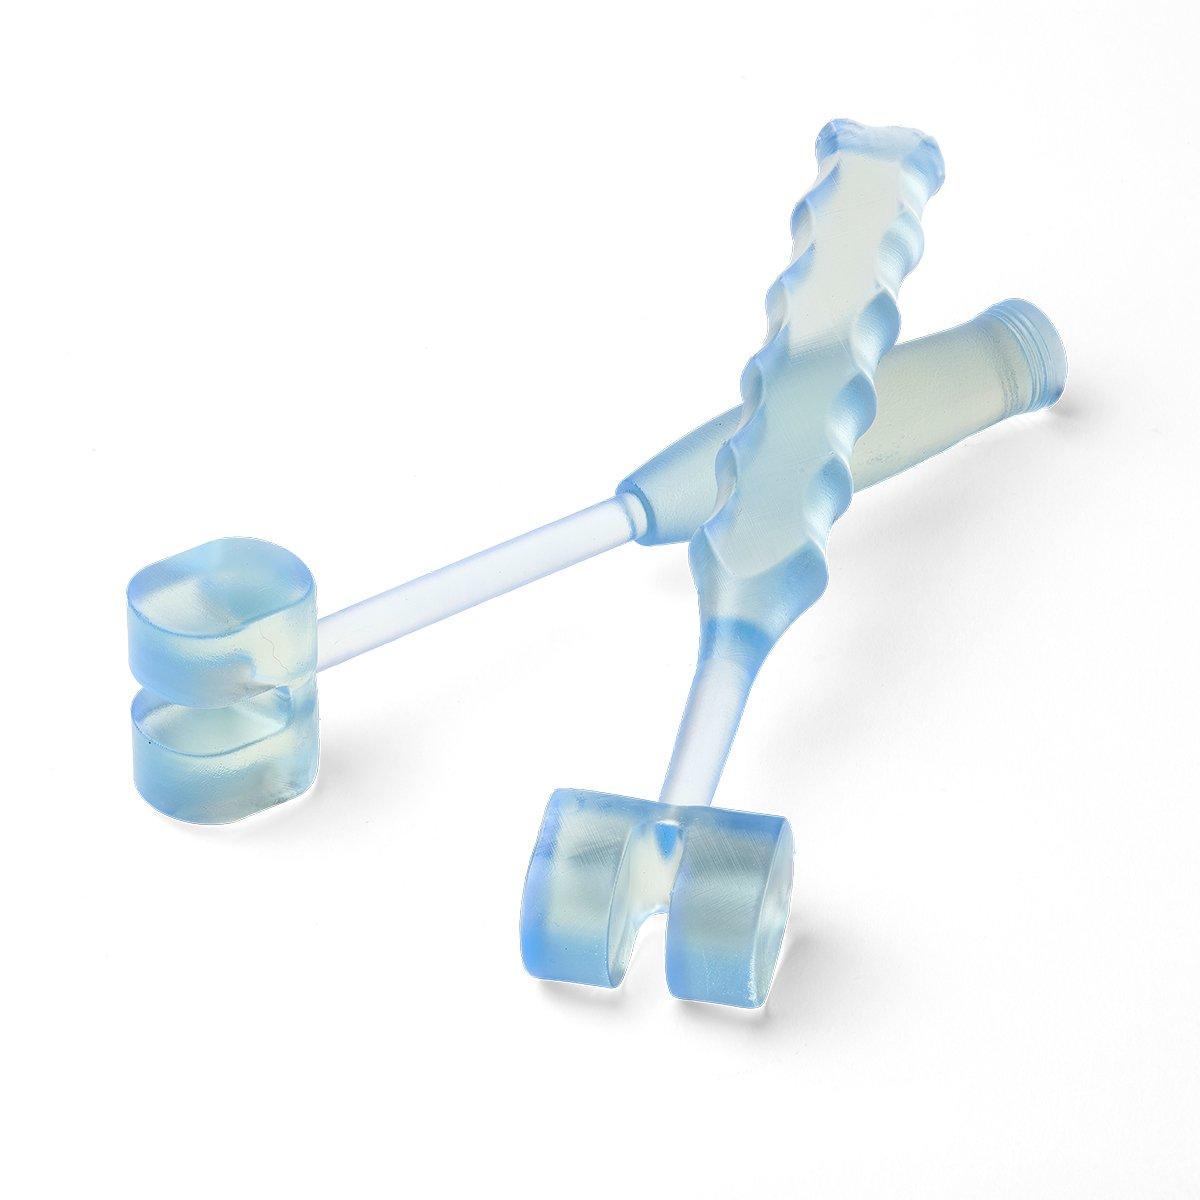 3D-gedrucktes chirurgisches Instrument aus BioMed Durable Resin